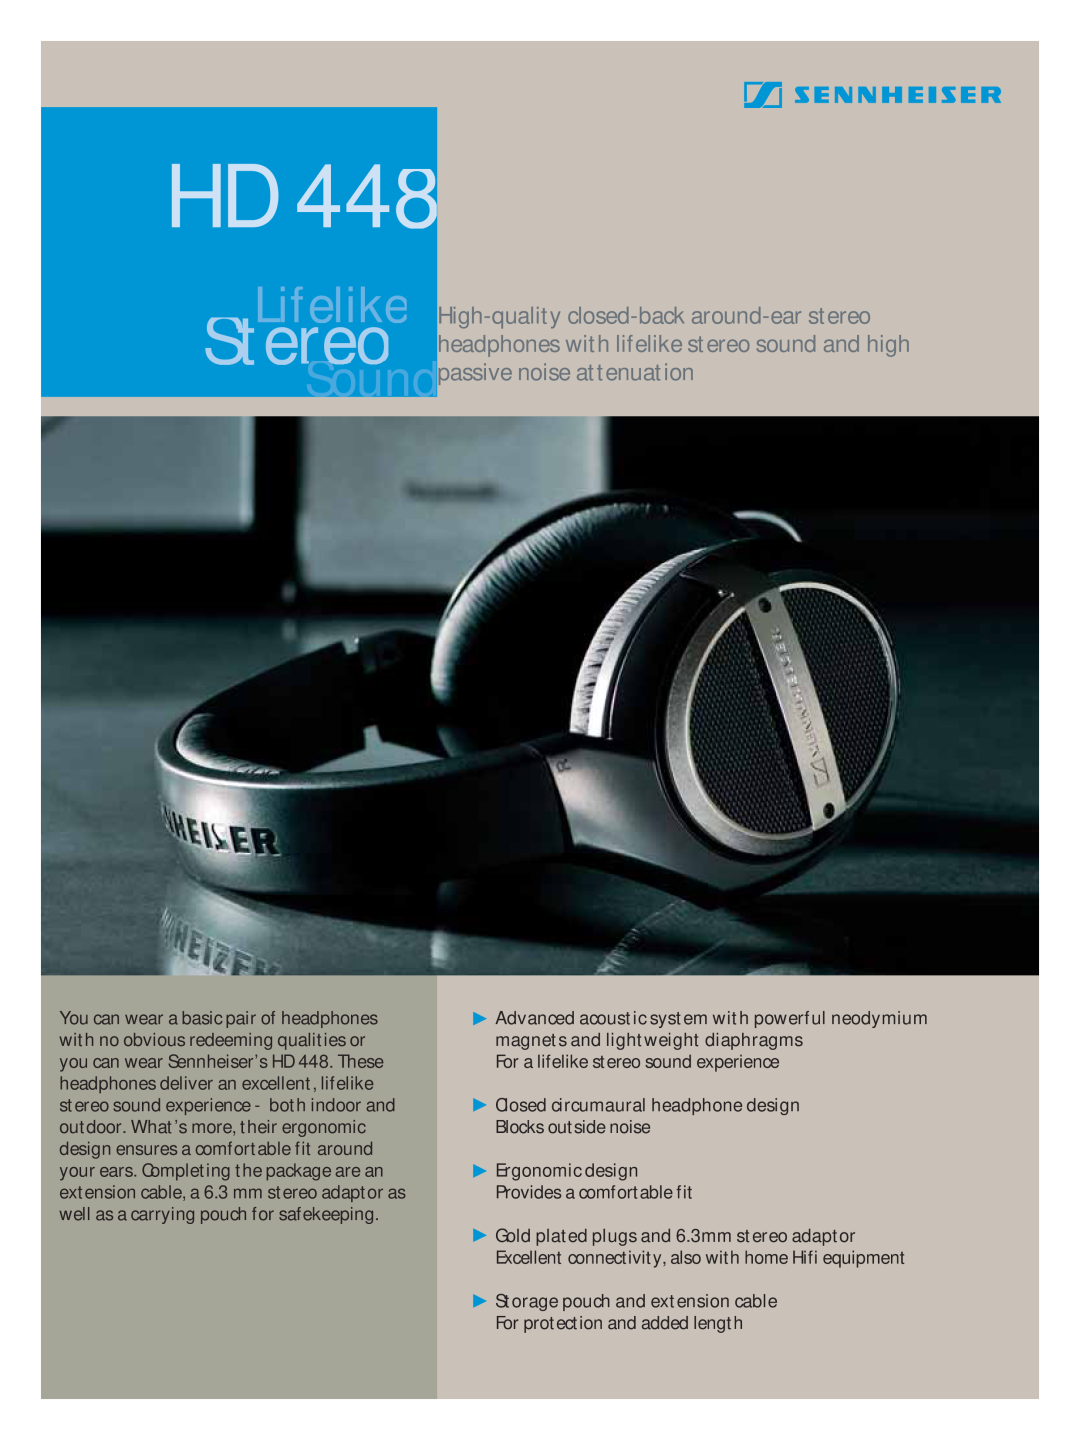 Sennheiser HD 448 manual Soundpassive noise attenuation, magnets and lightweight diaphragms, Ergonomic design 